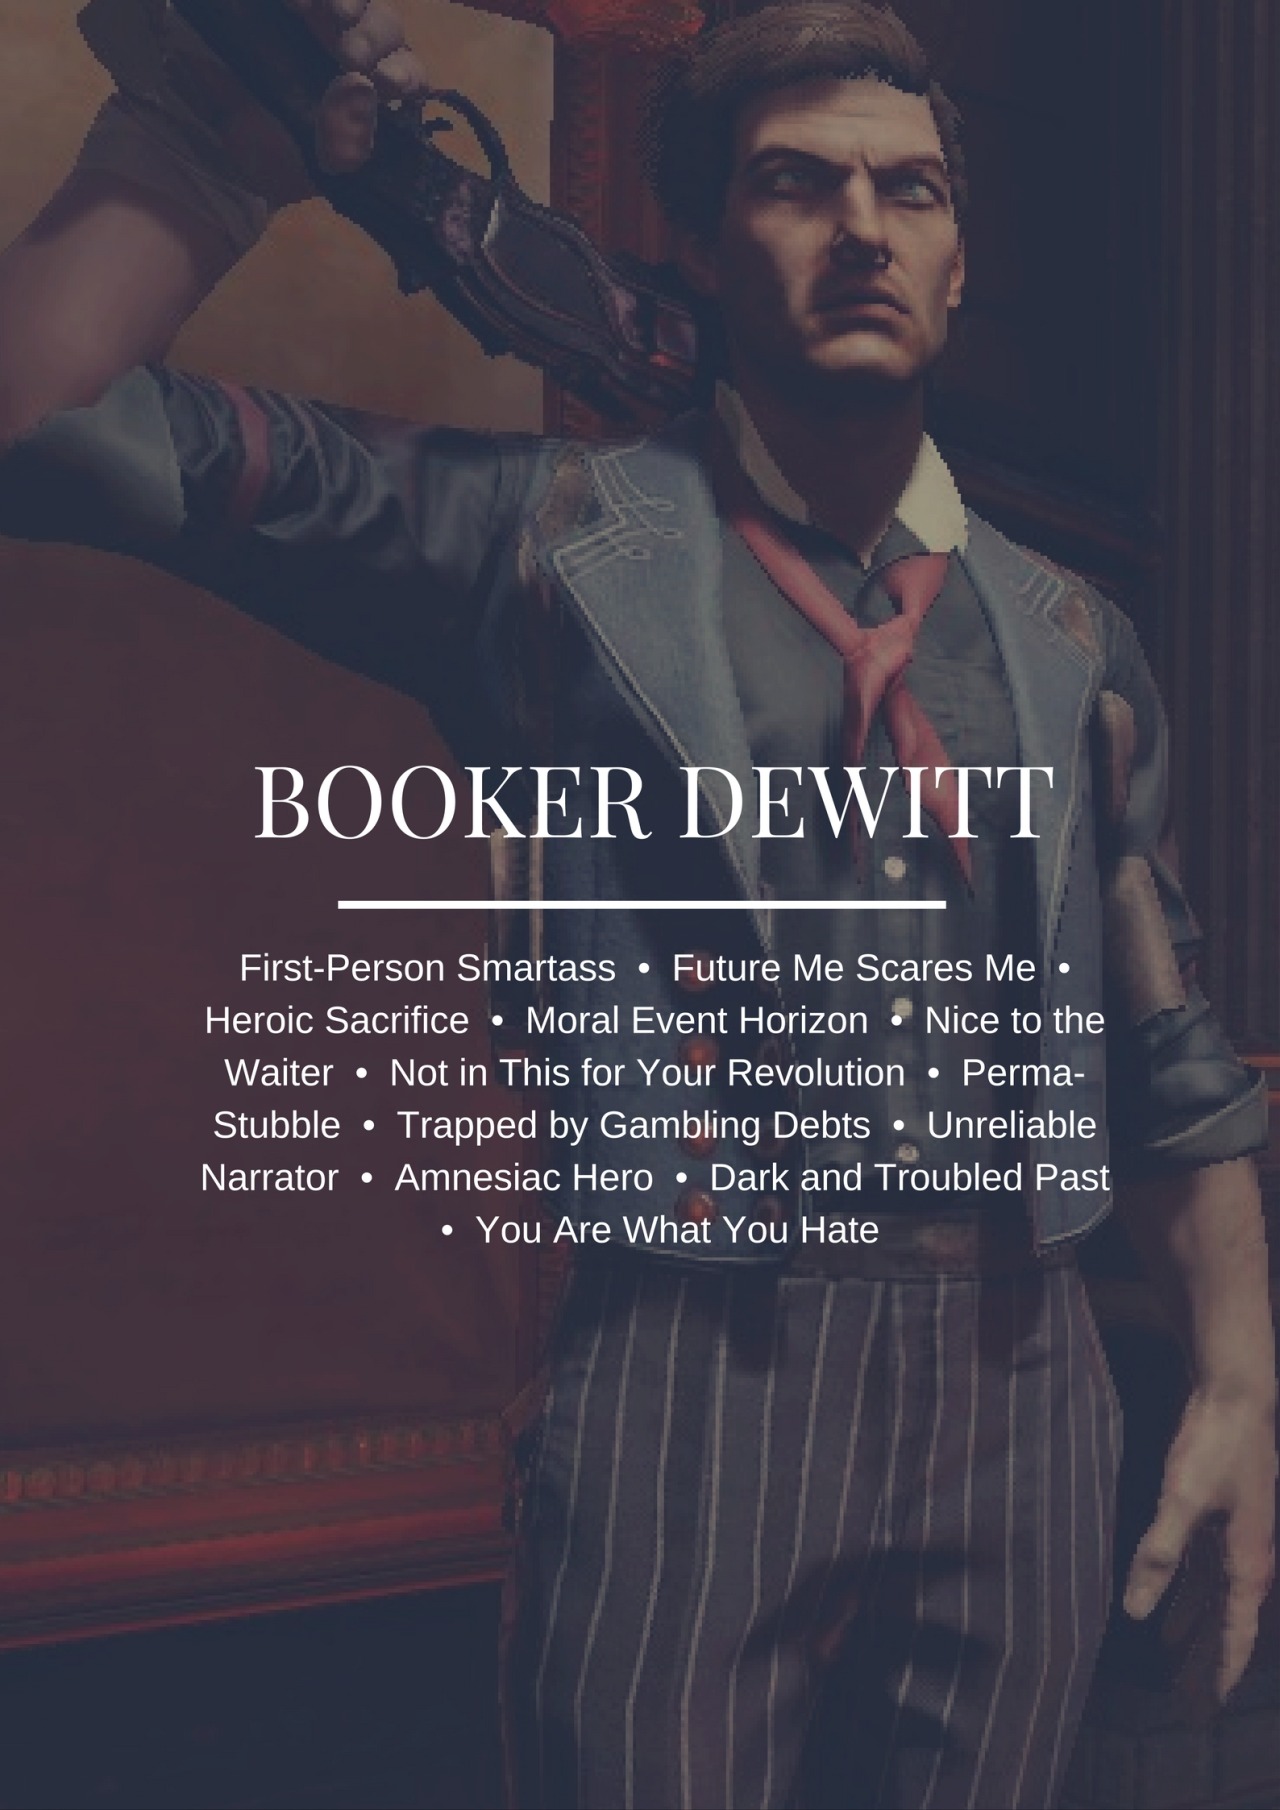 BioShock Infinite: Booker DeWitt / Characters - TV Tropes